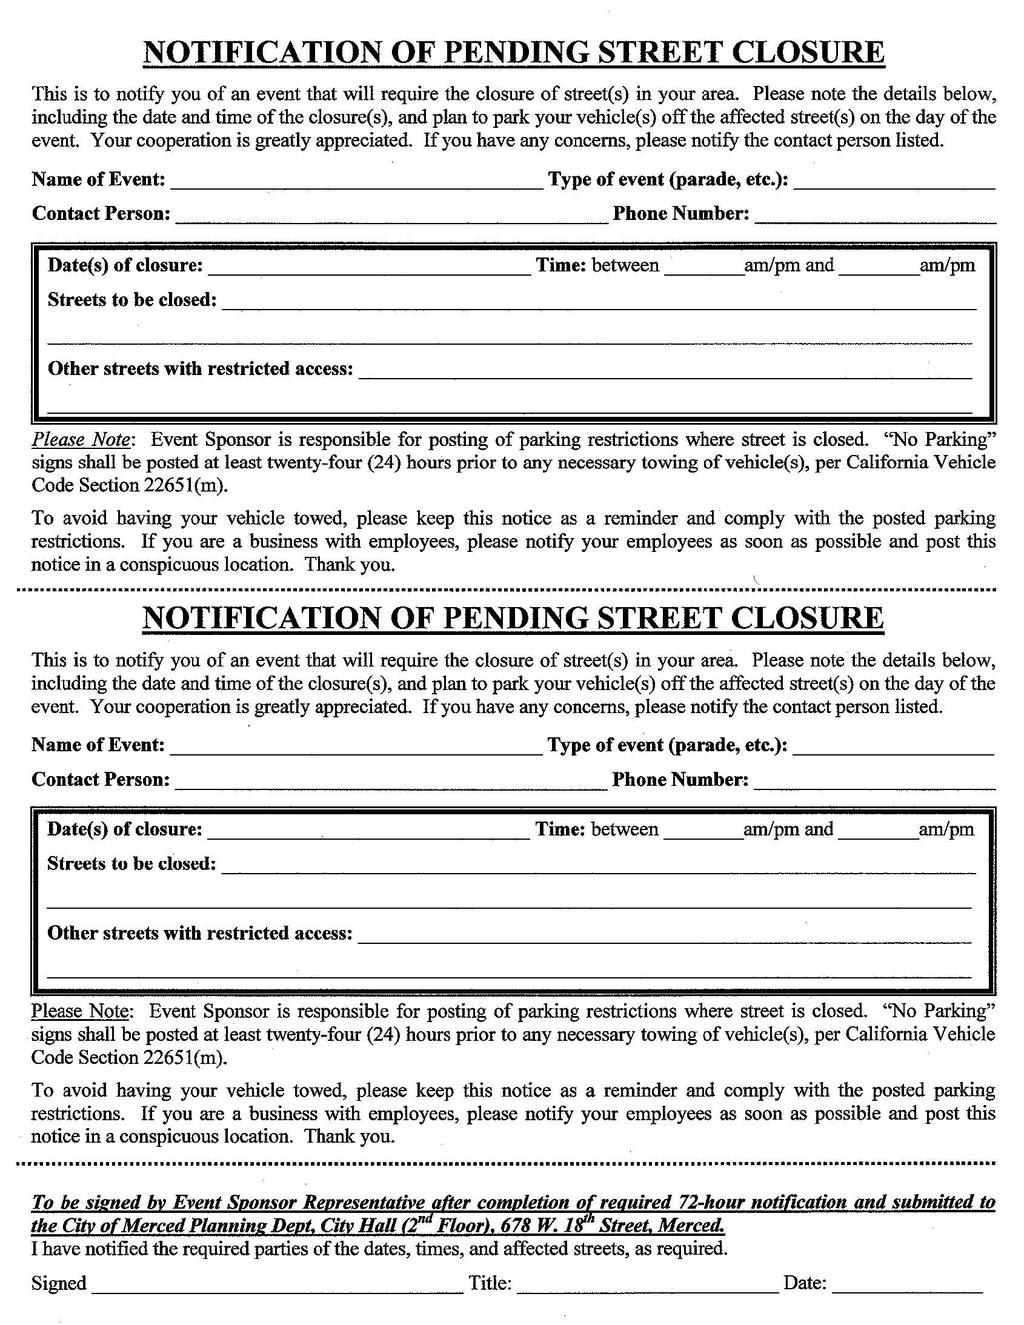 Street Closure Application